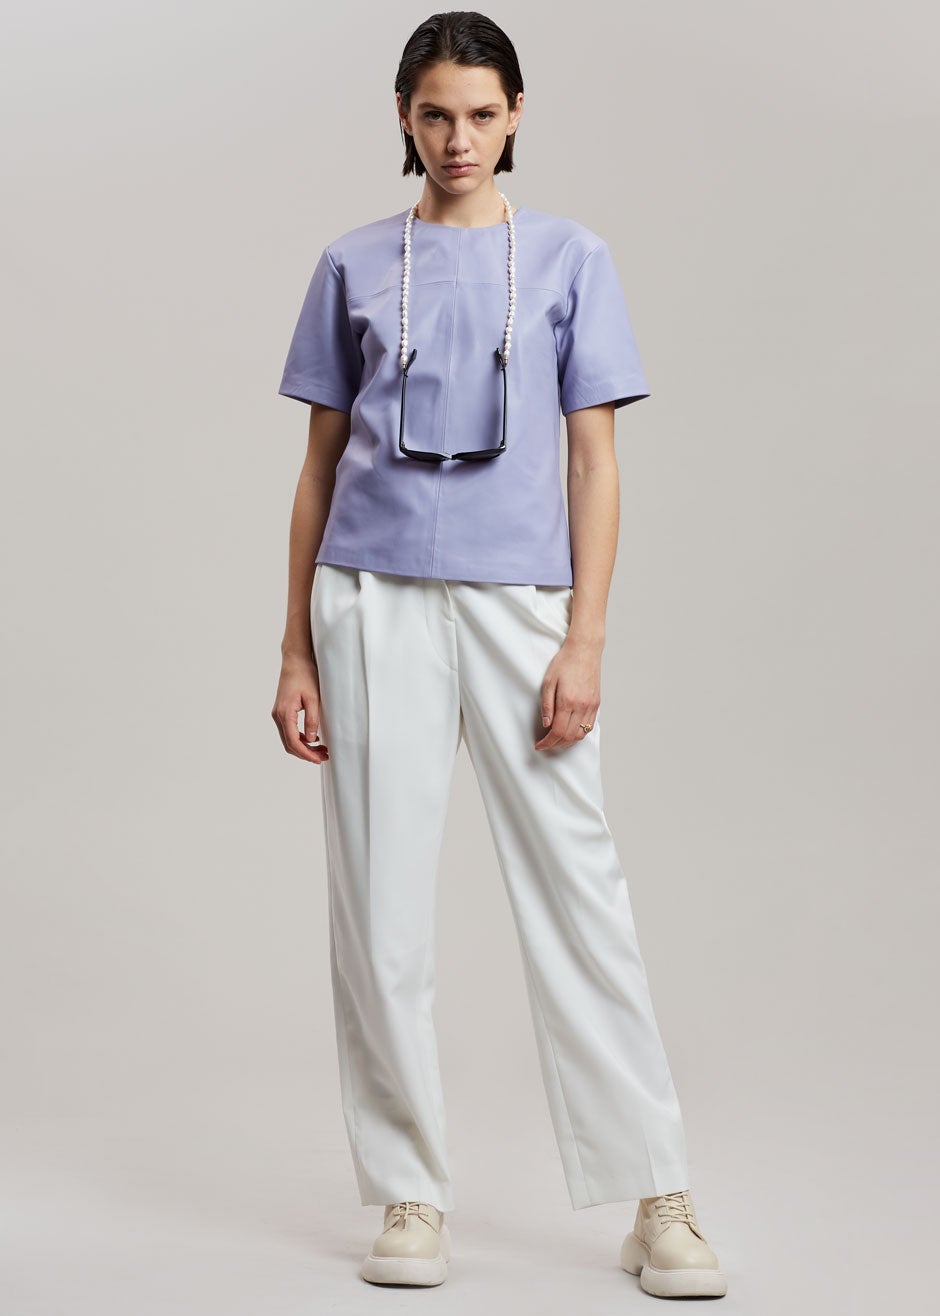 REMAIN Audrey Leather Shirt - Pastel Lilac - 4